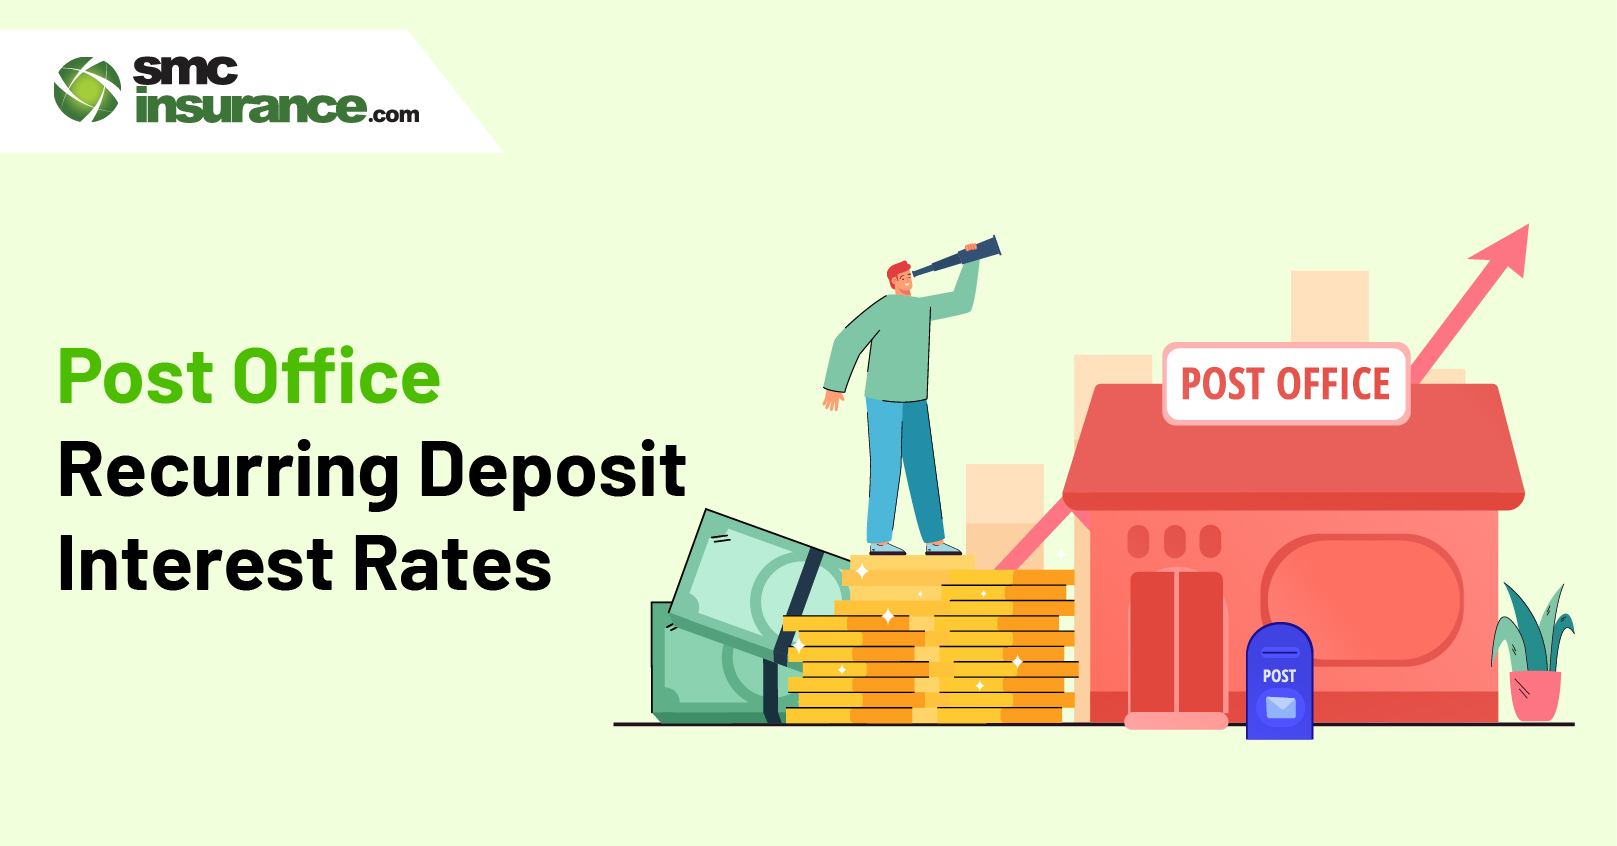 Post Office Recurring Deposit Interest Rates